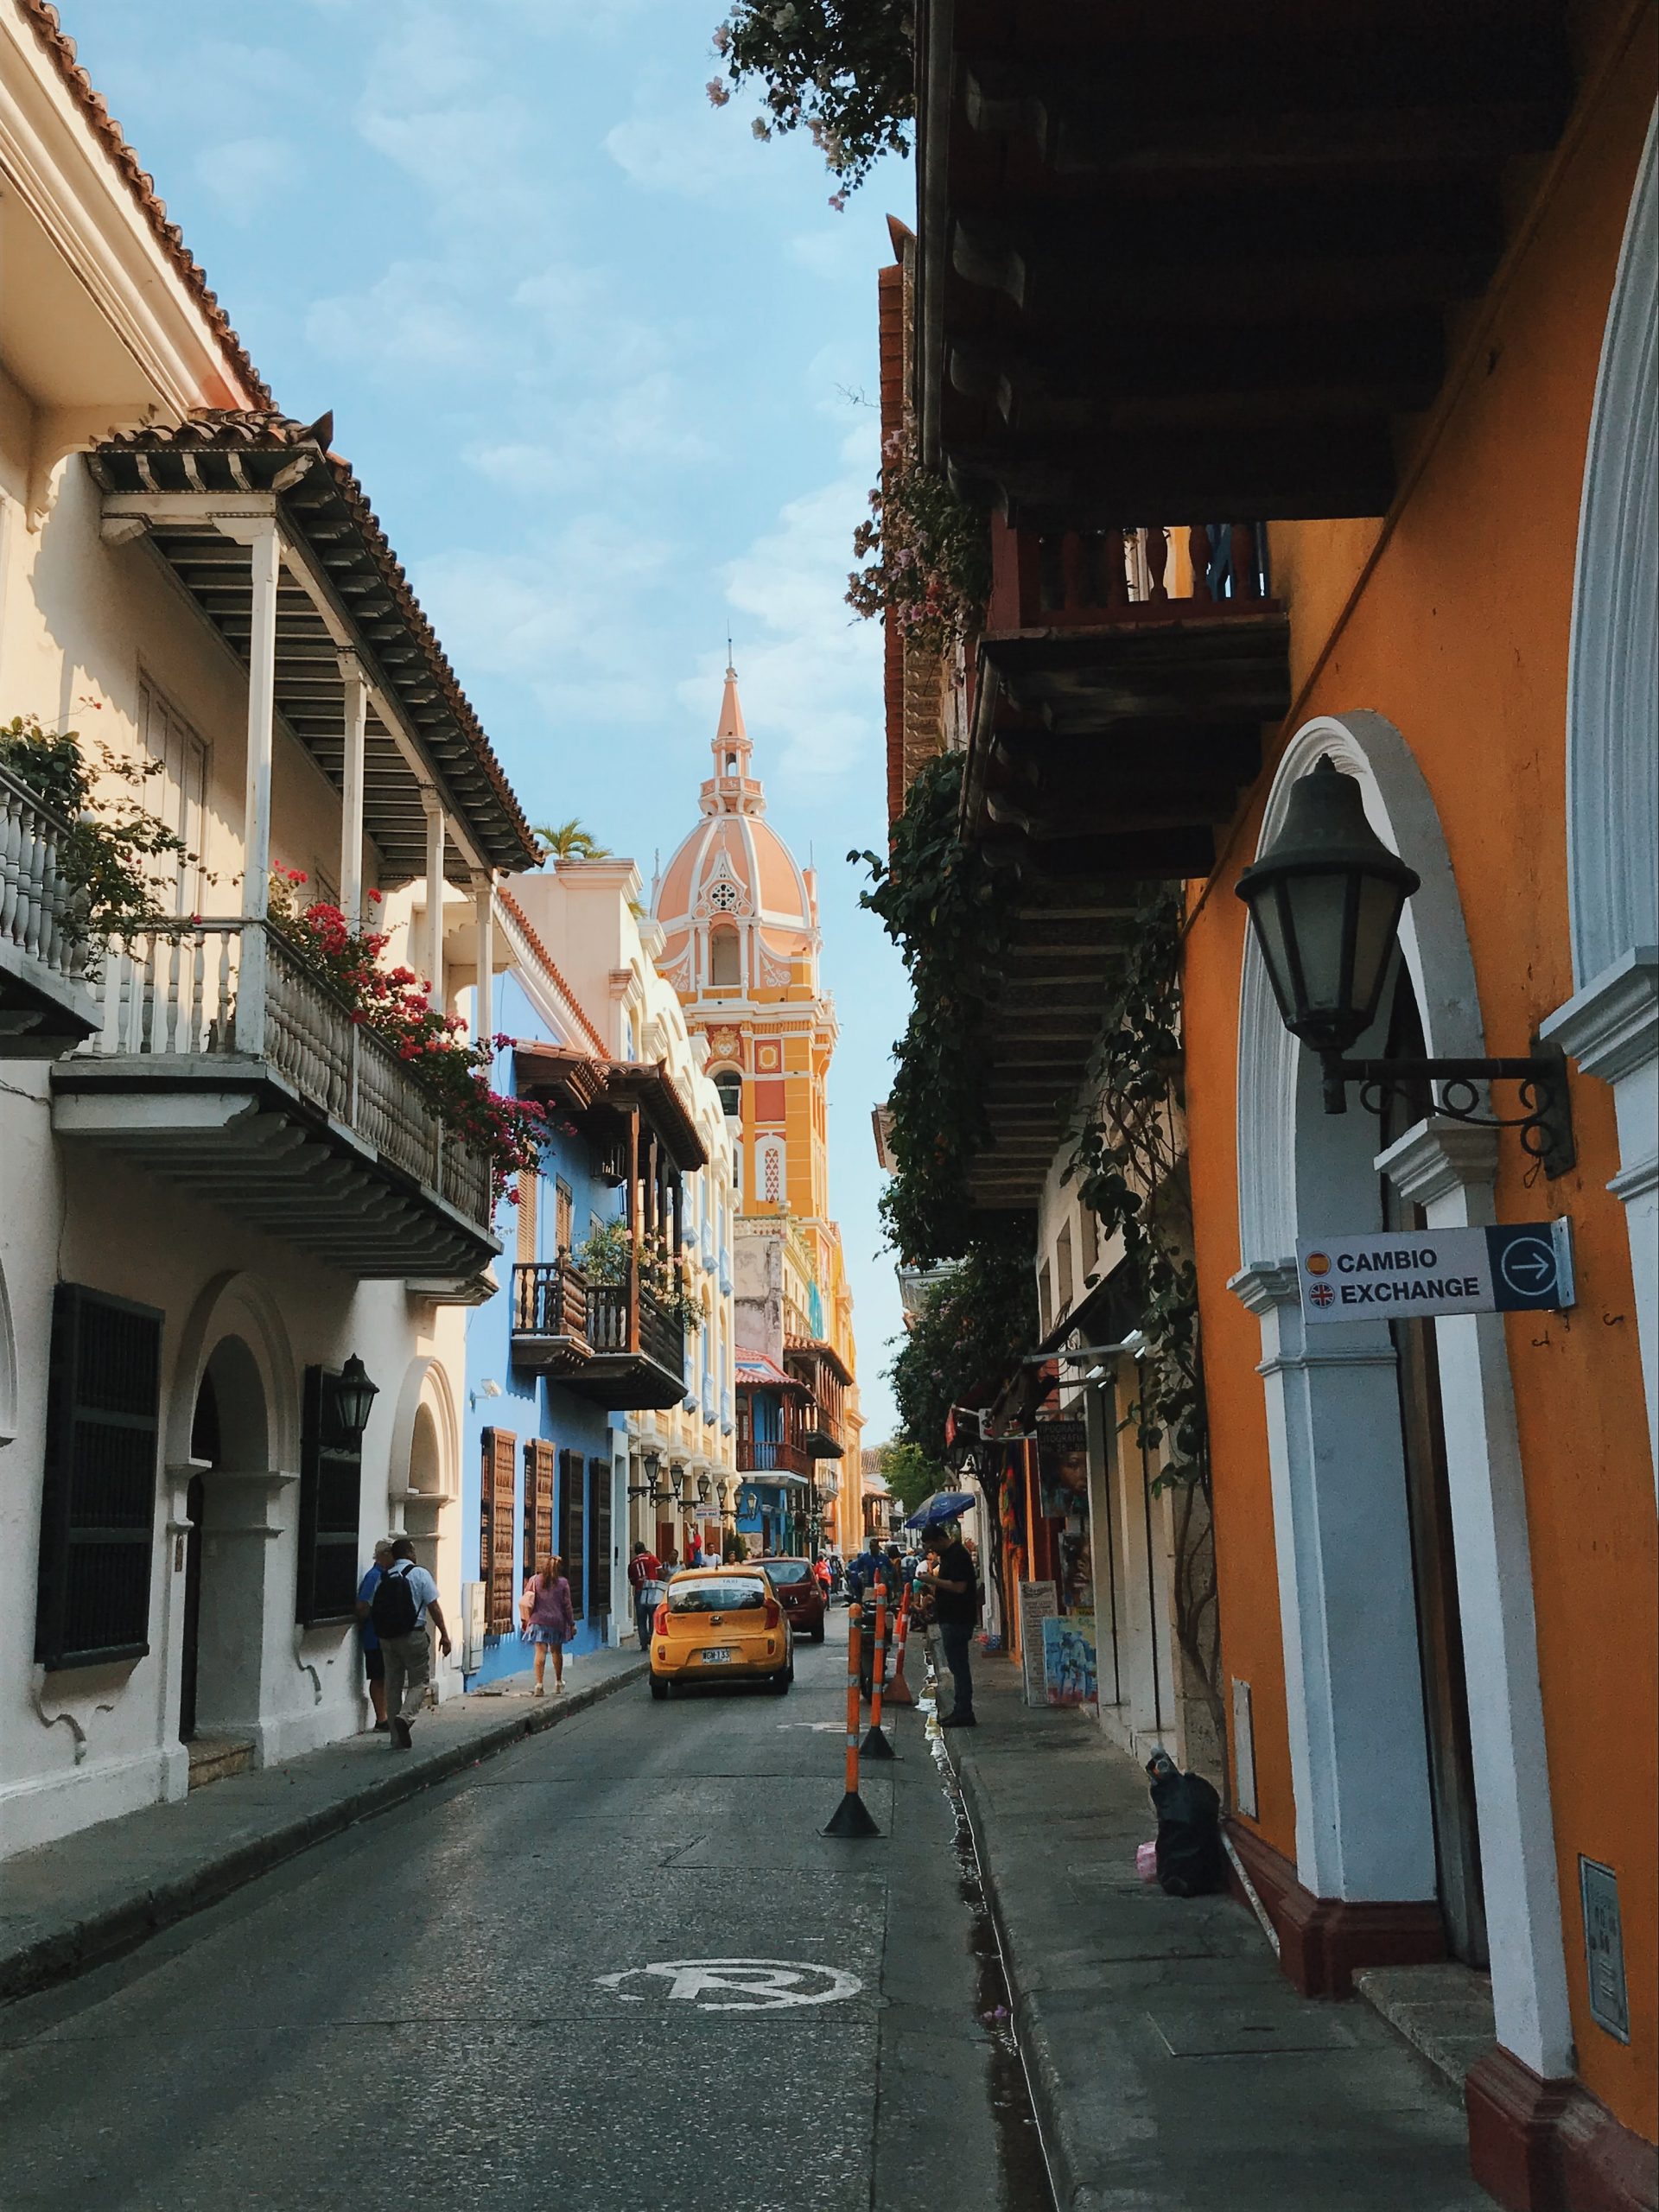 Calle de Cartagena de Indias